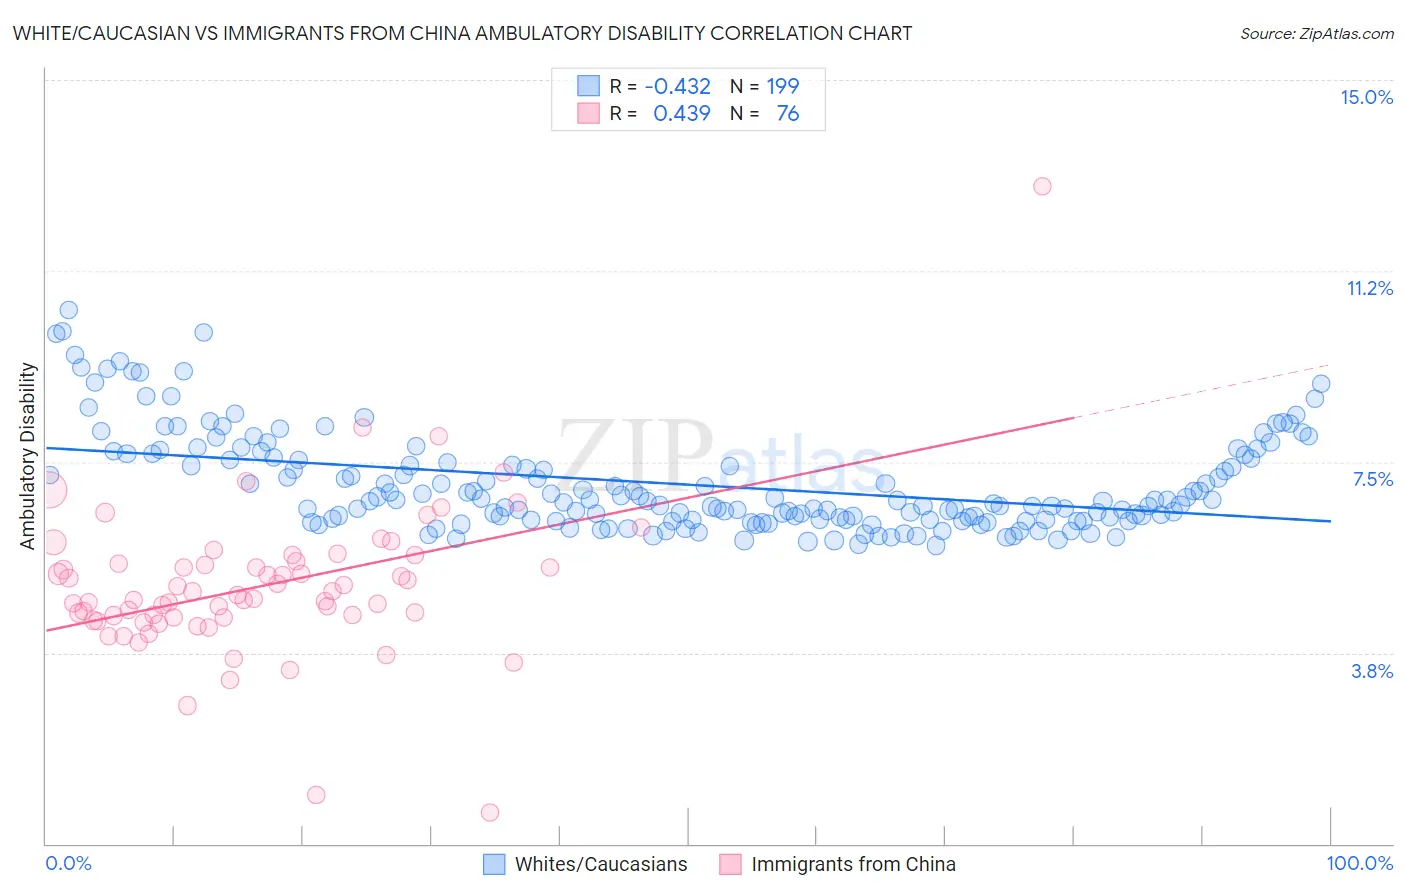 White/Caucasian vs Immigrants from China Ambulatory Disability